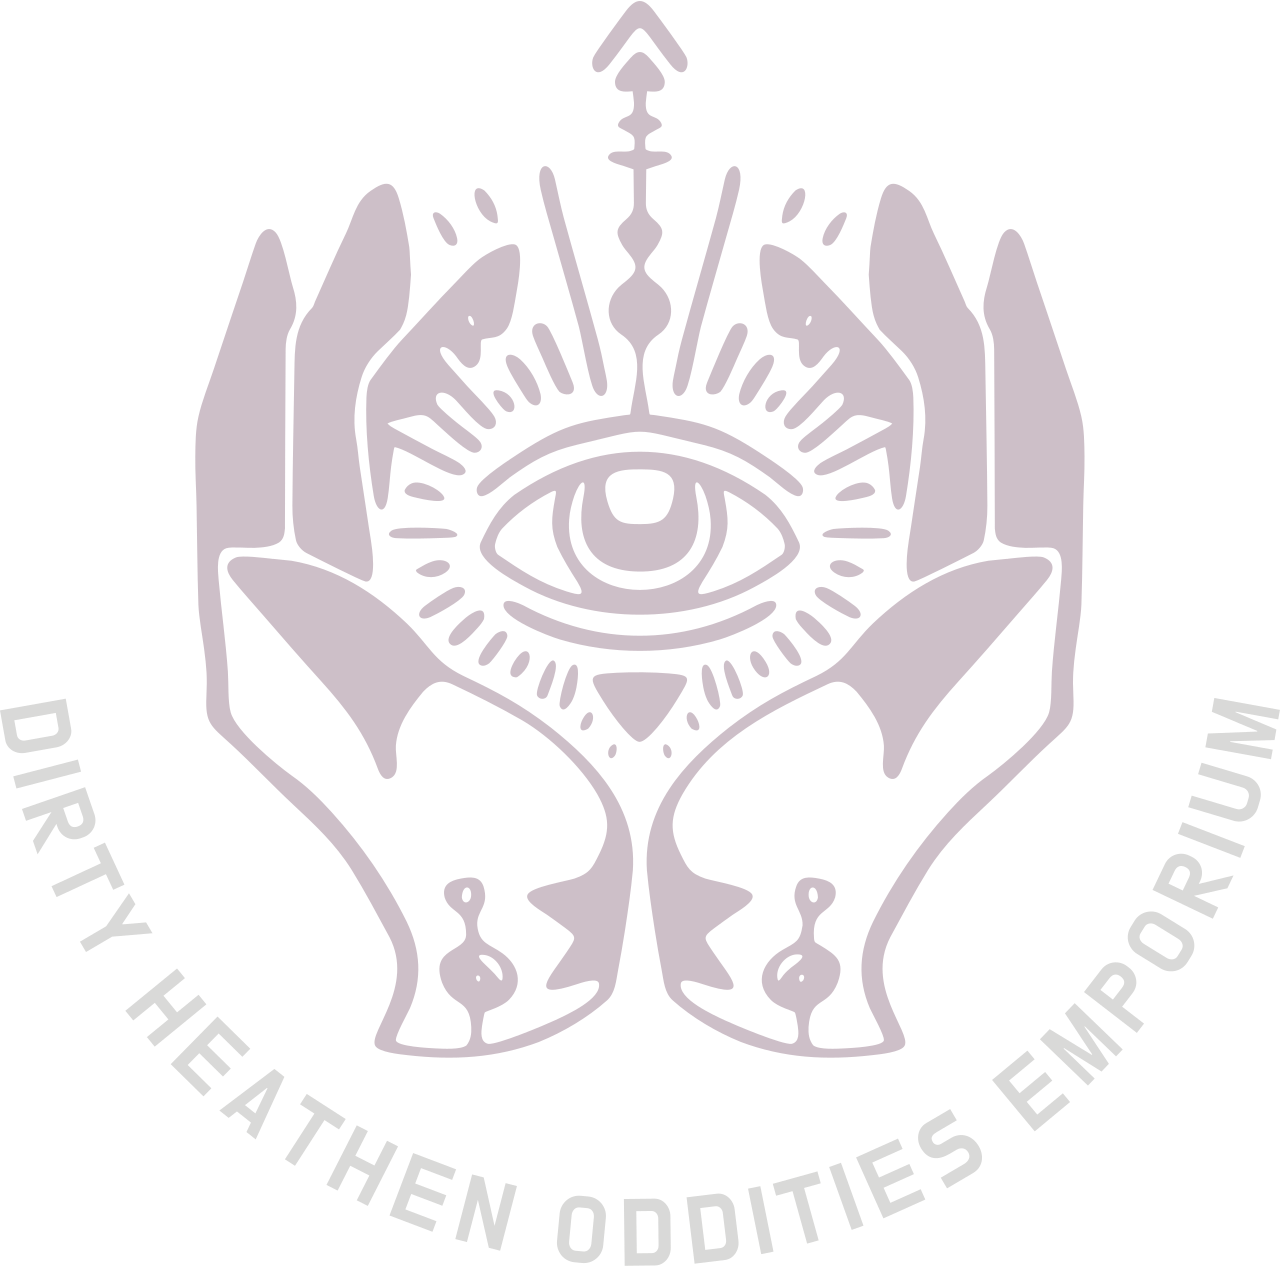 Dirty Heathen Oddities Emporium's logo